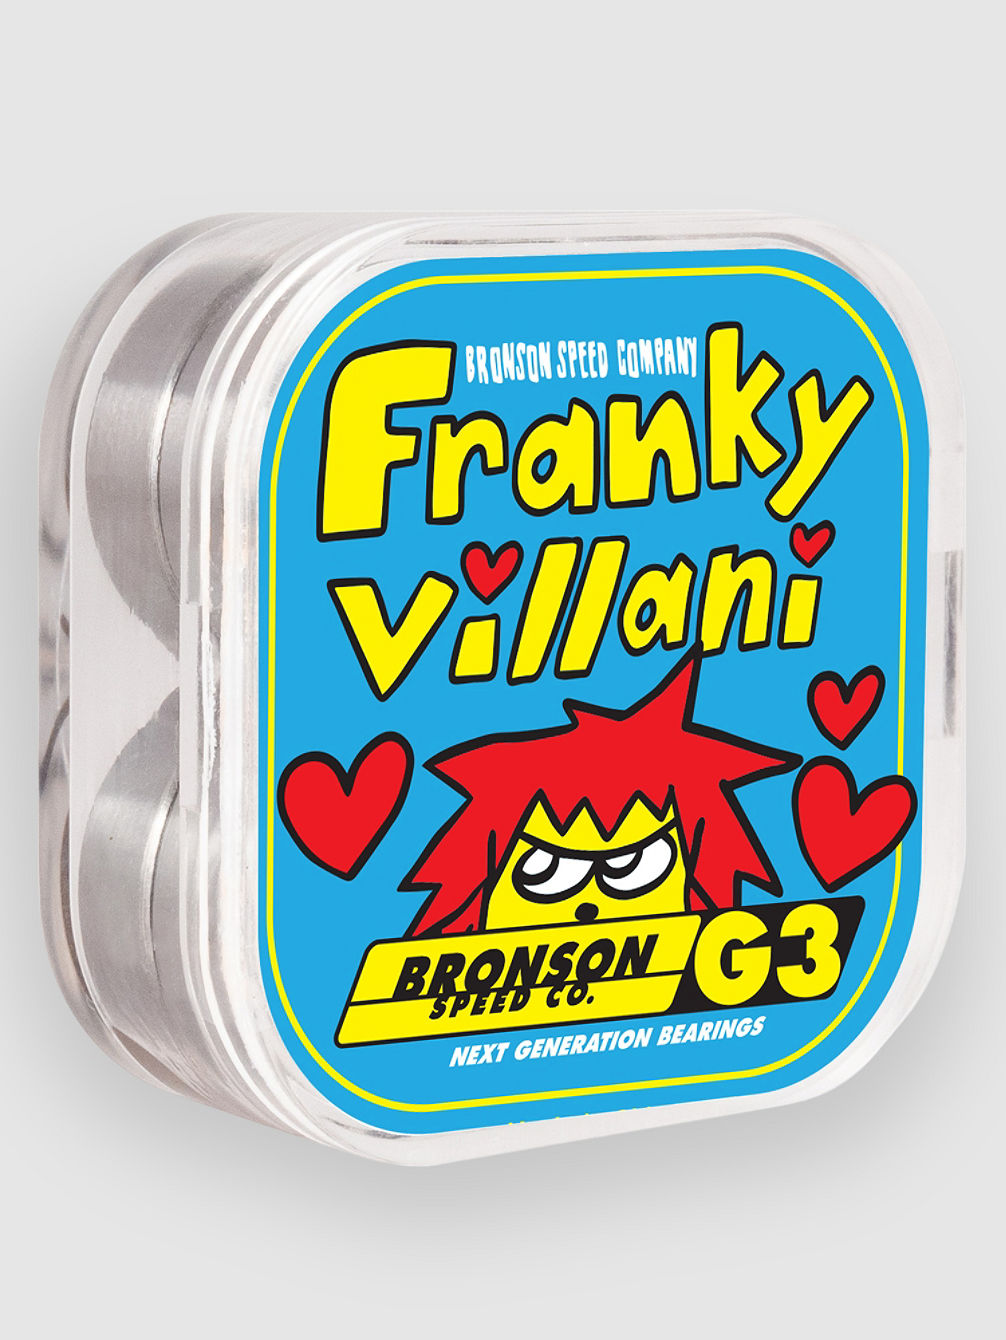 Franky Villani Pro G3 Roulements